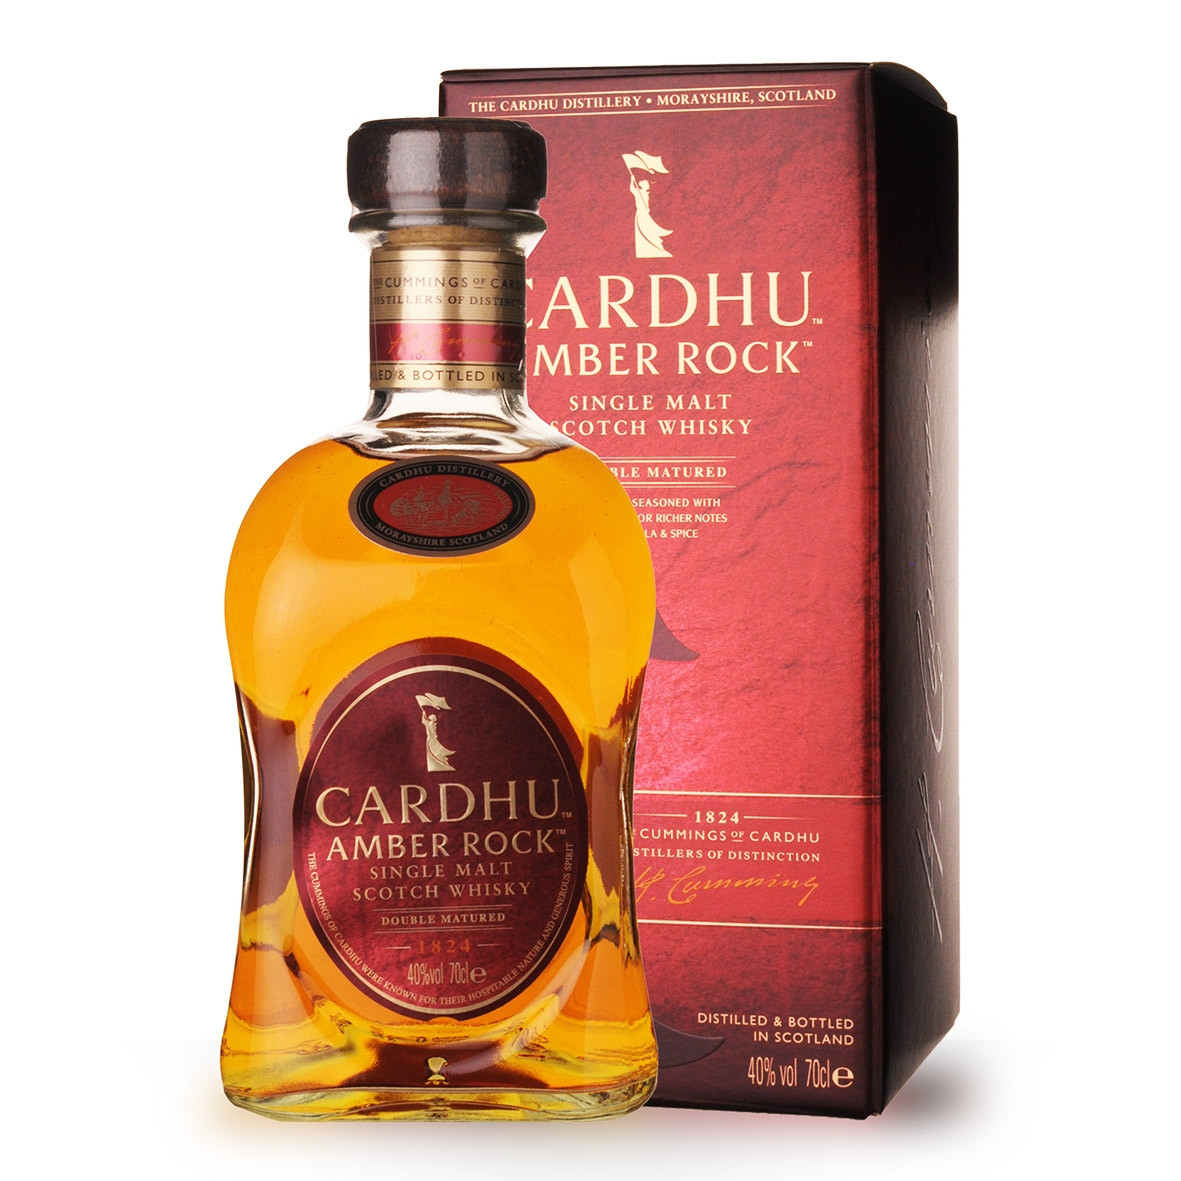 Acheter du Whisky Cardhu Amber Rock 70cl vendu en Etui sur notre site -  Odyssee-vins